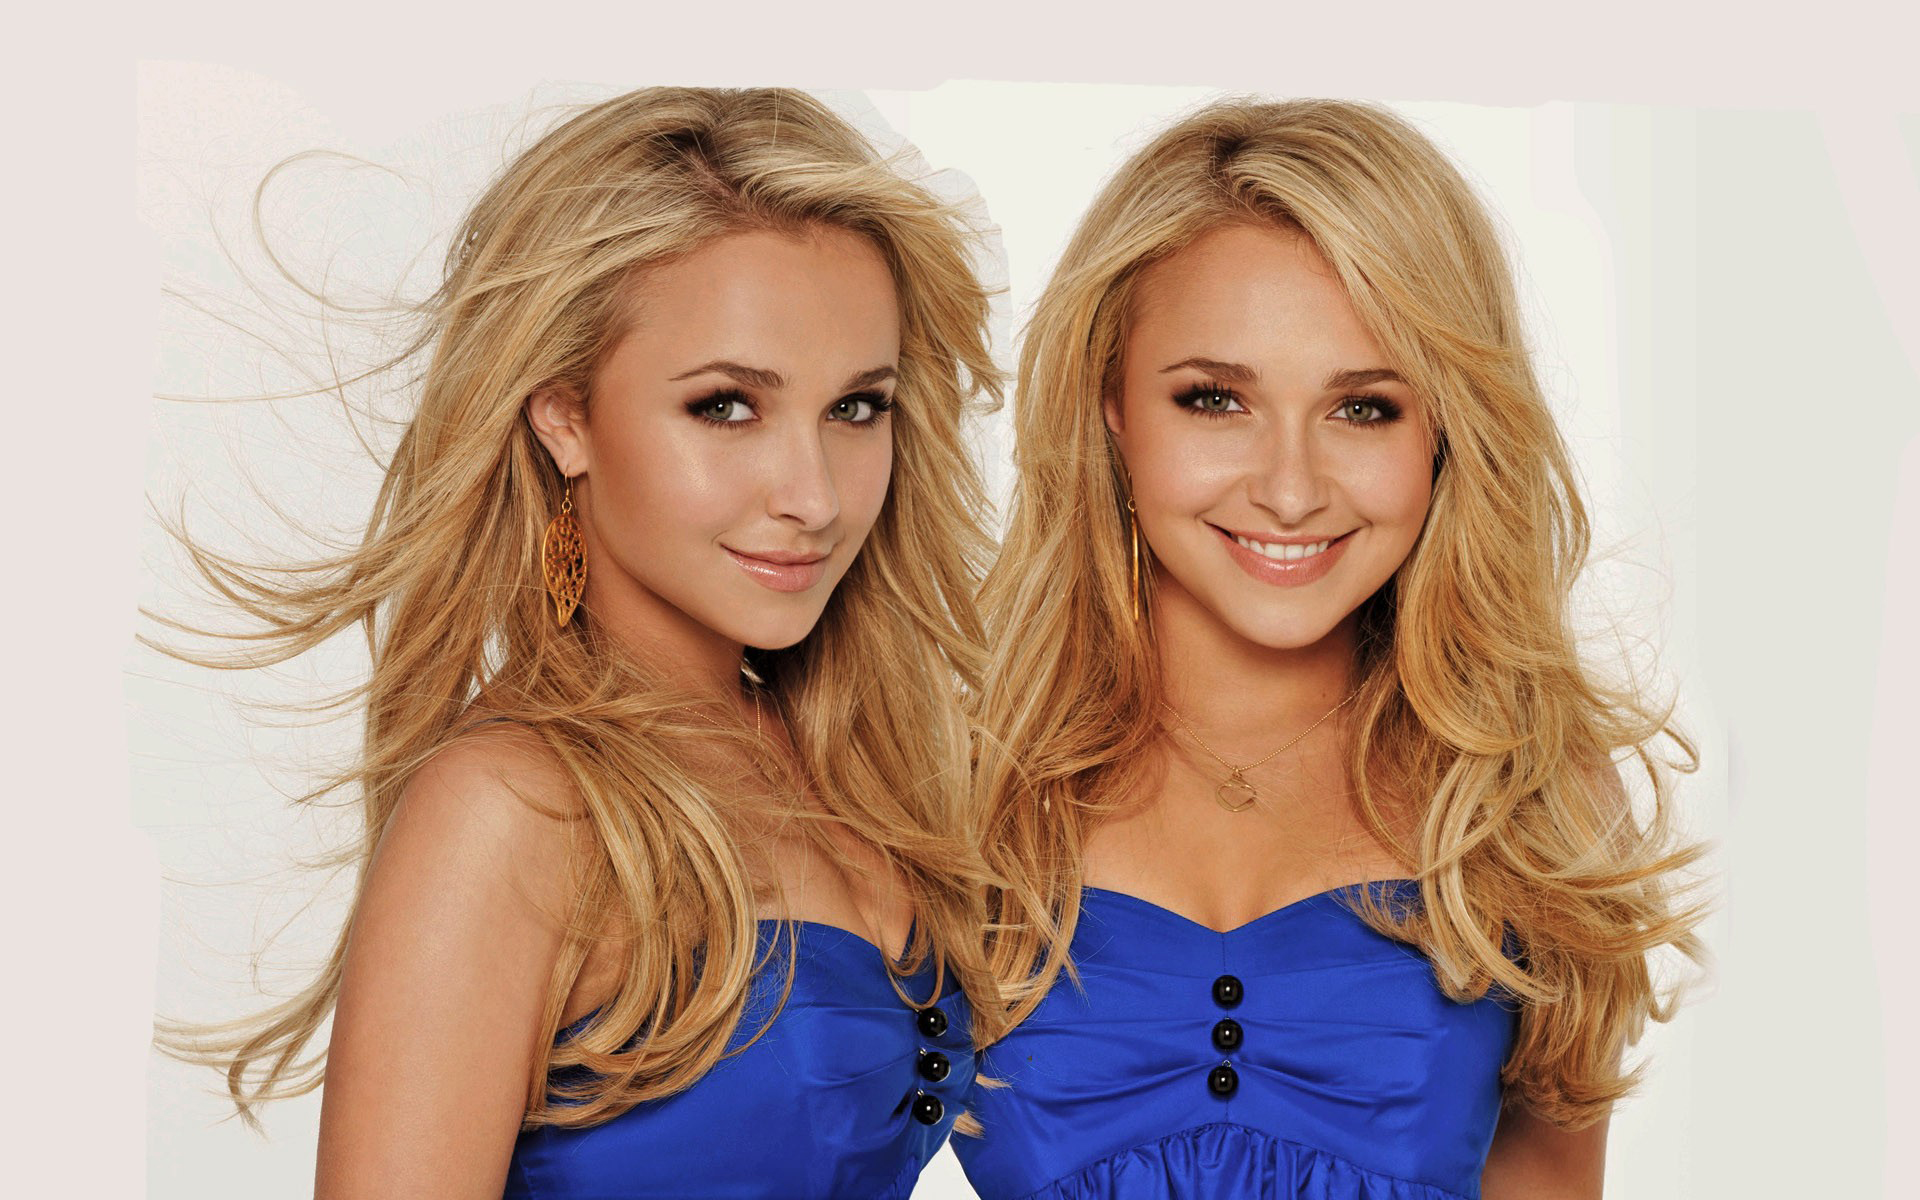 Blond twins youboobers